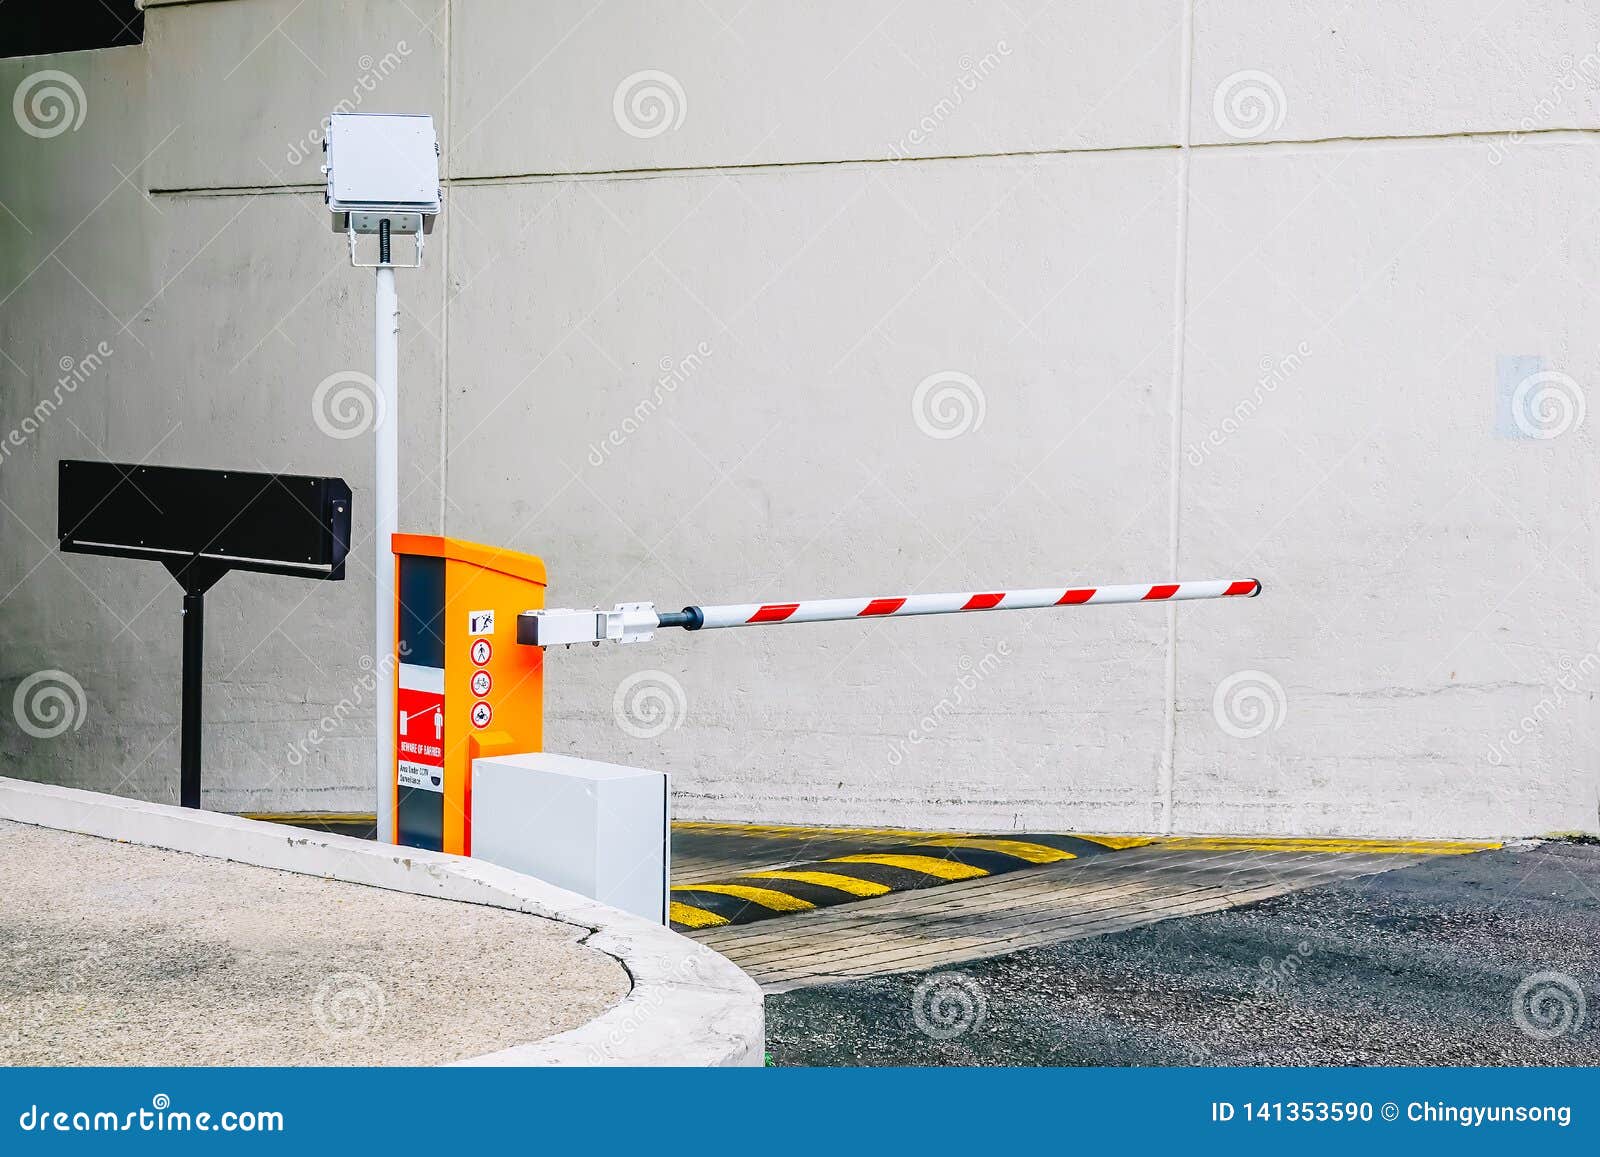 Car Park Barrier, Security System for Building Access - Barrier Gate ...